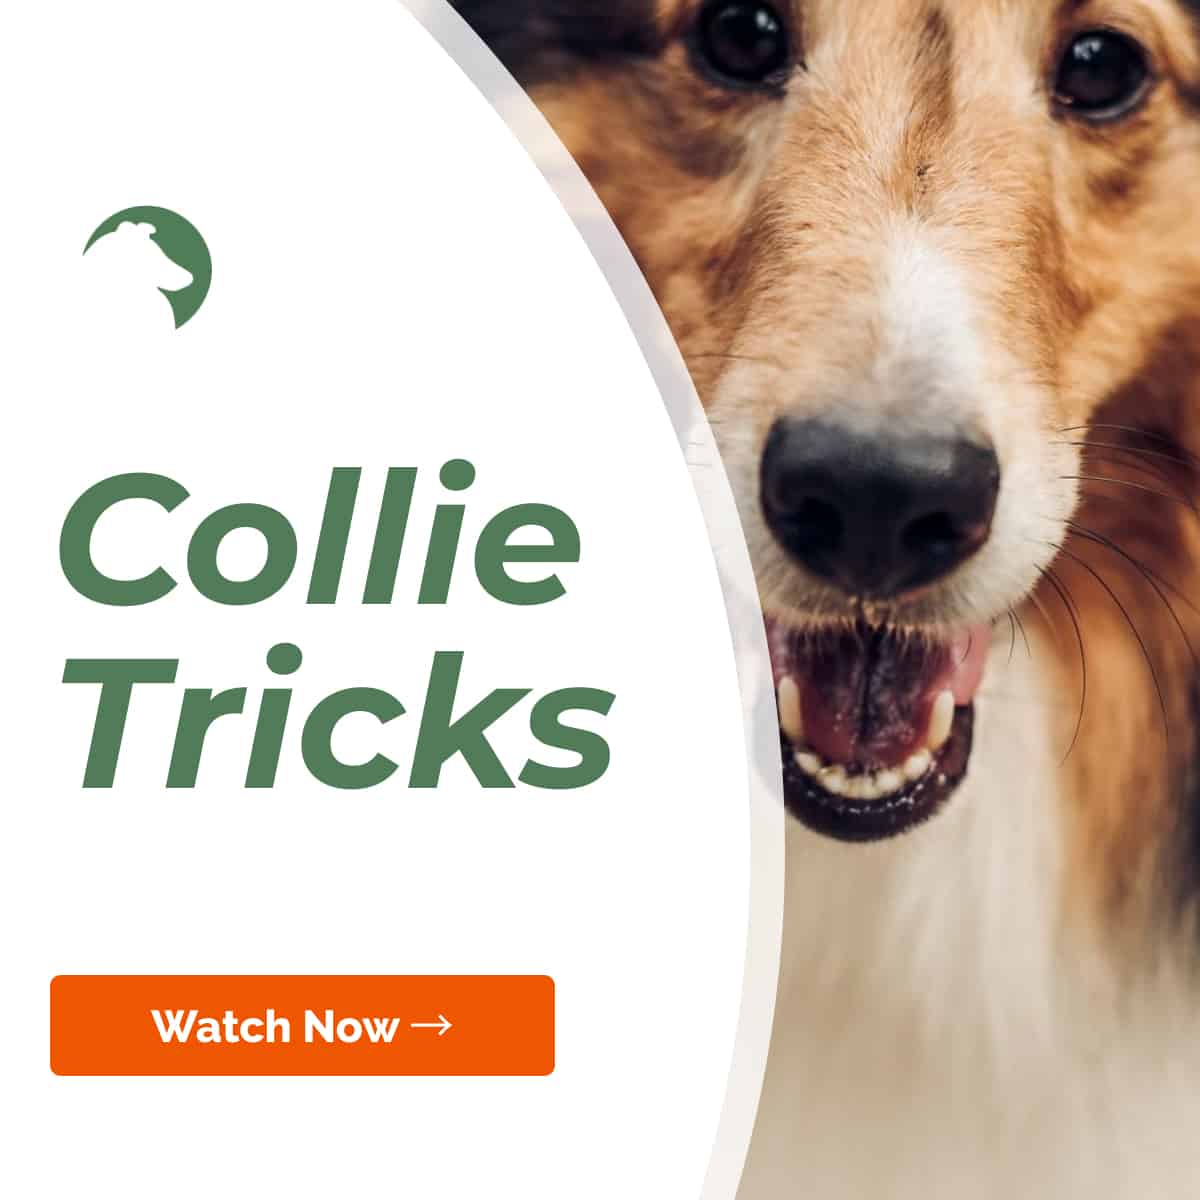 https://colliechatter.com/wp-content/uploads/2020/04/collie-tricks-video-overlay.jpg